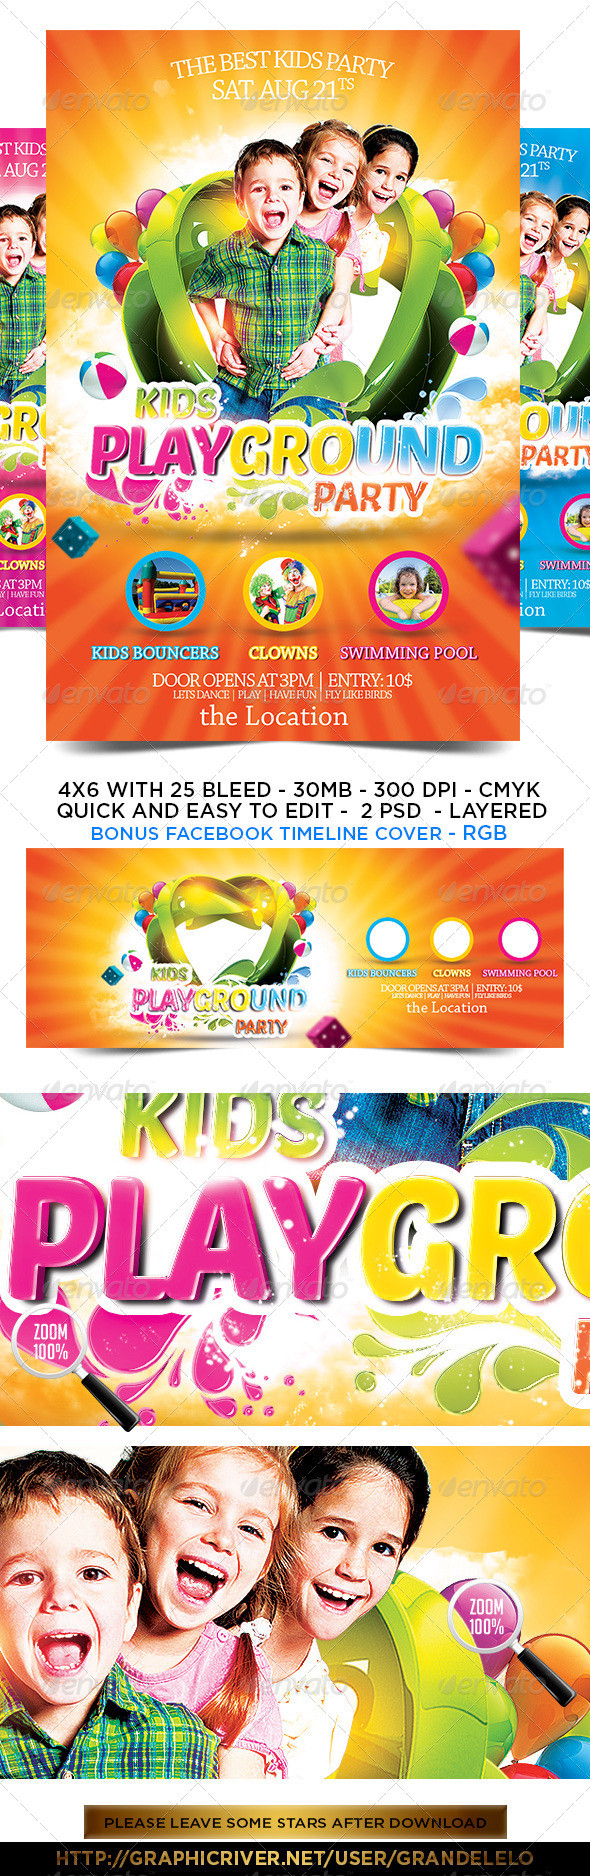 Kids Party Flyer
 Kids Party Flyer Template 2 0 by grandelelo